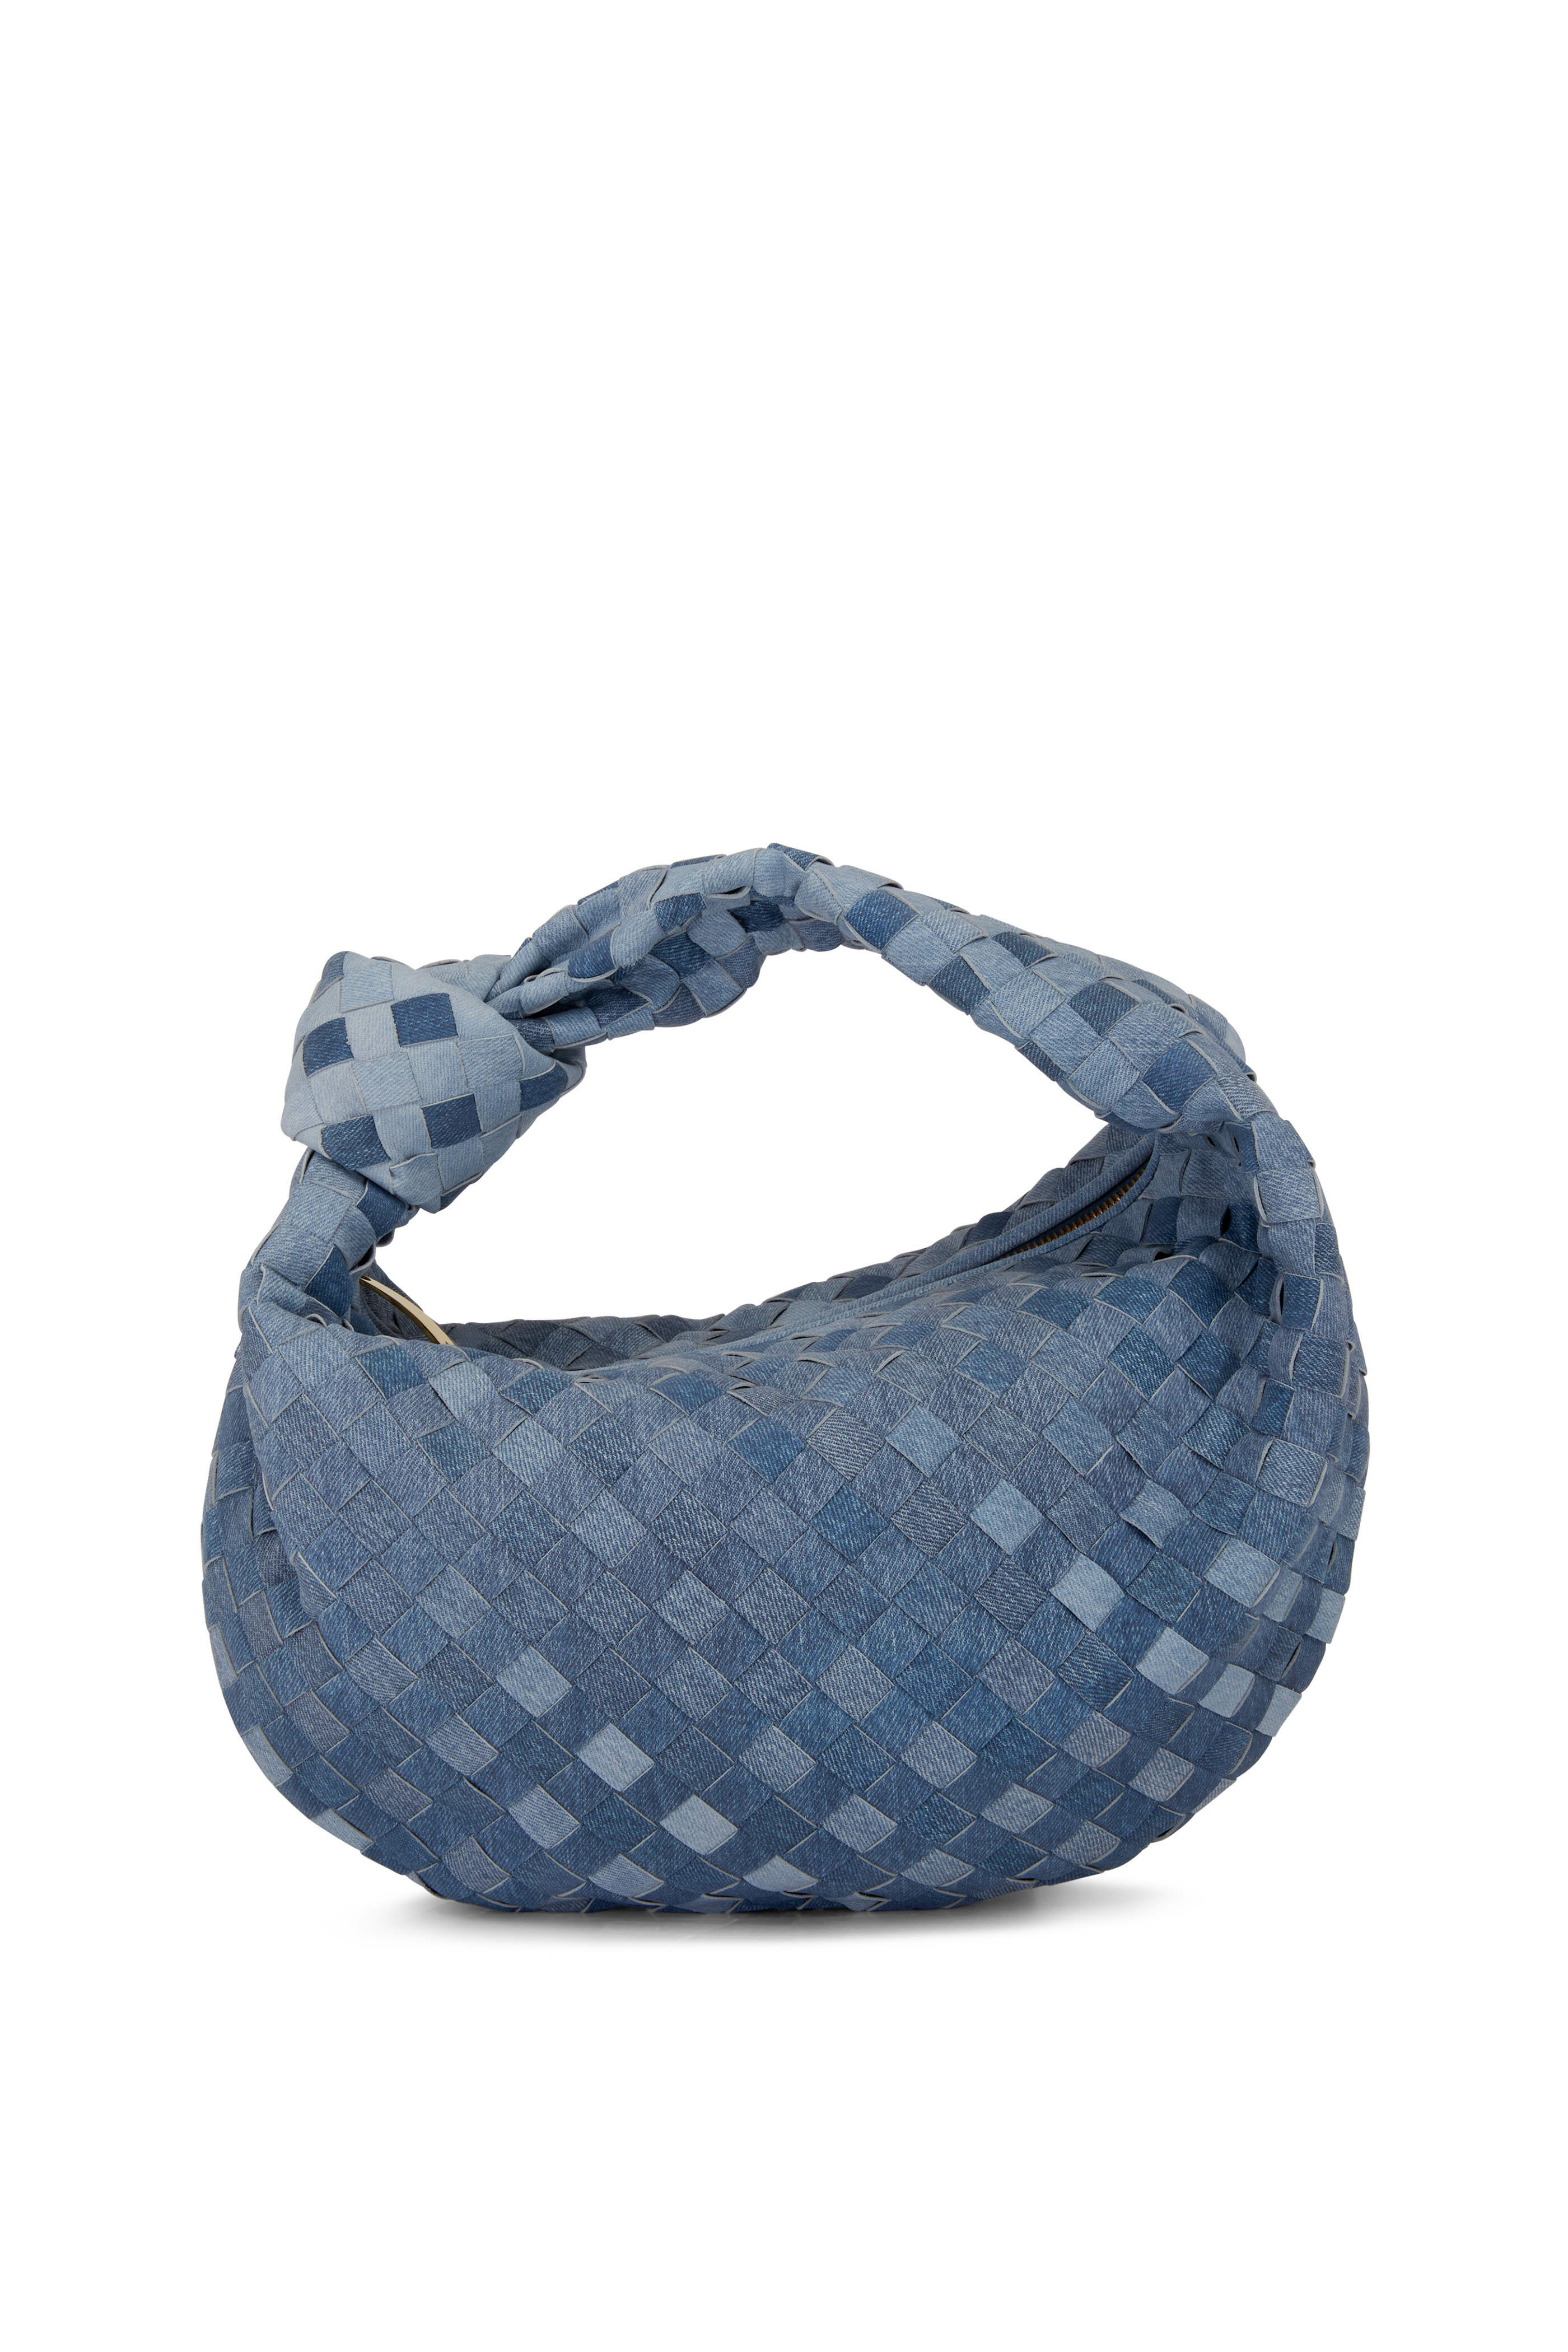 Bottega Veneta Women's Teen Jodie Space Blue Woven Leather Bag | by Mitchell Stores